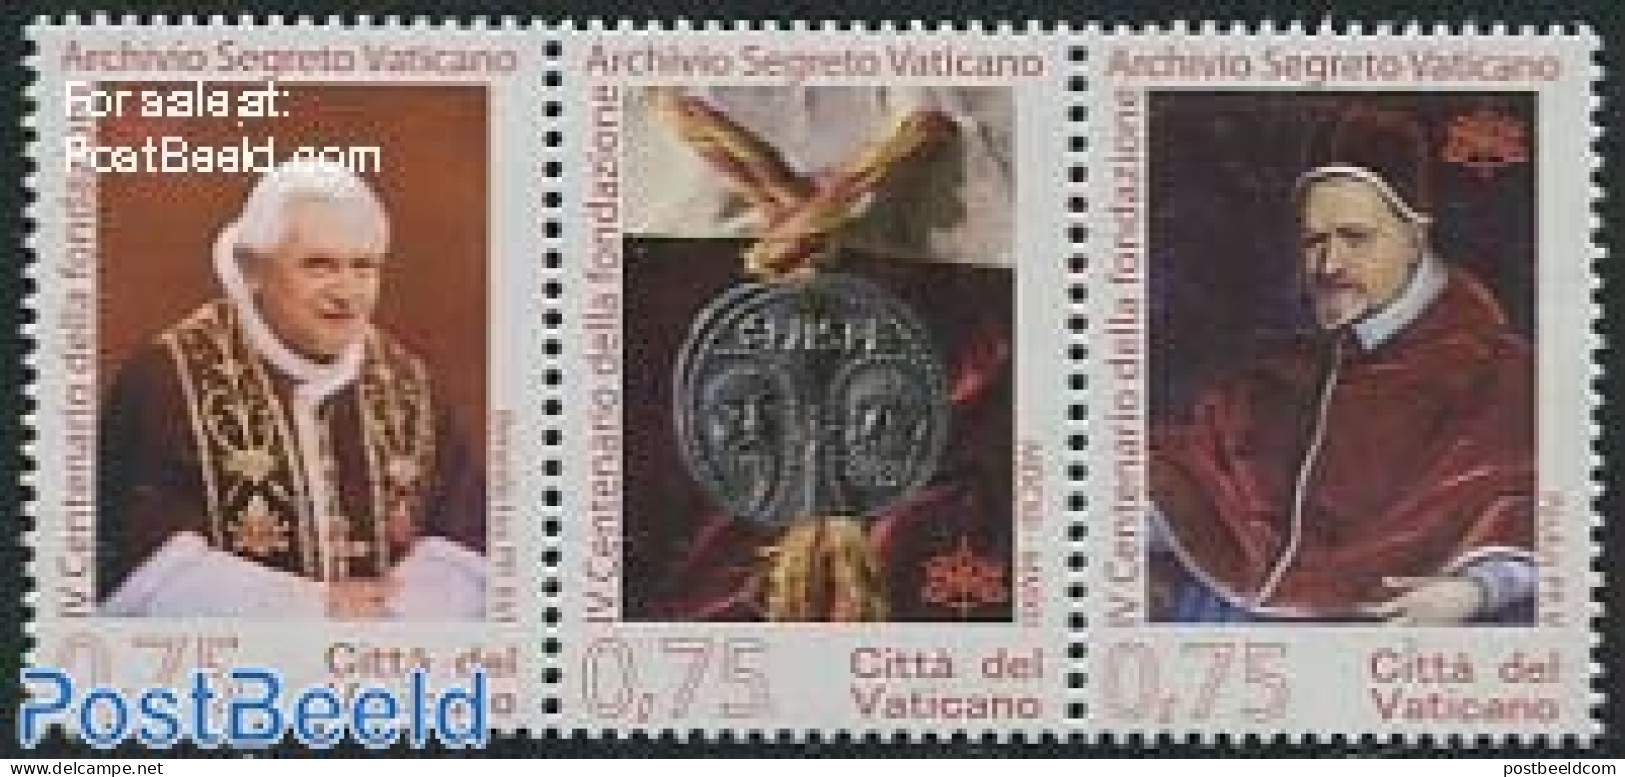 Vatican 2012 Secret Archives 3v [::], Mint NH, Religion - Pope - Religion - Art - Libraries - Unused Stamps